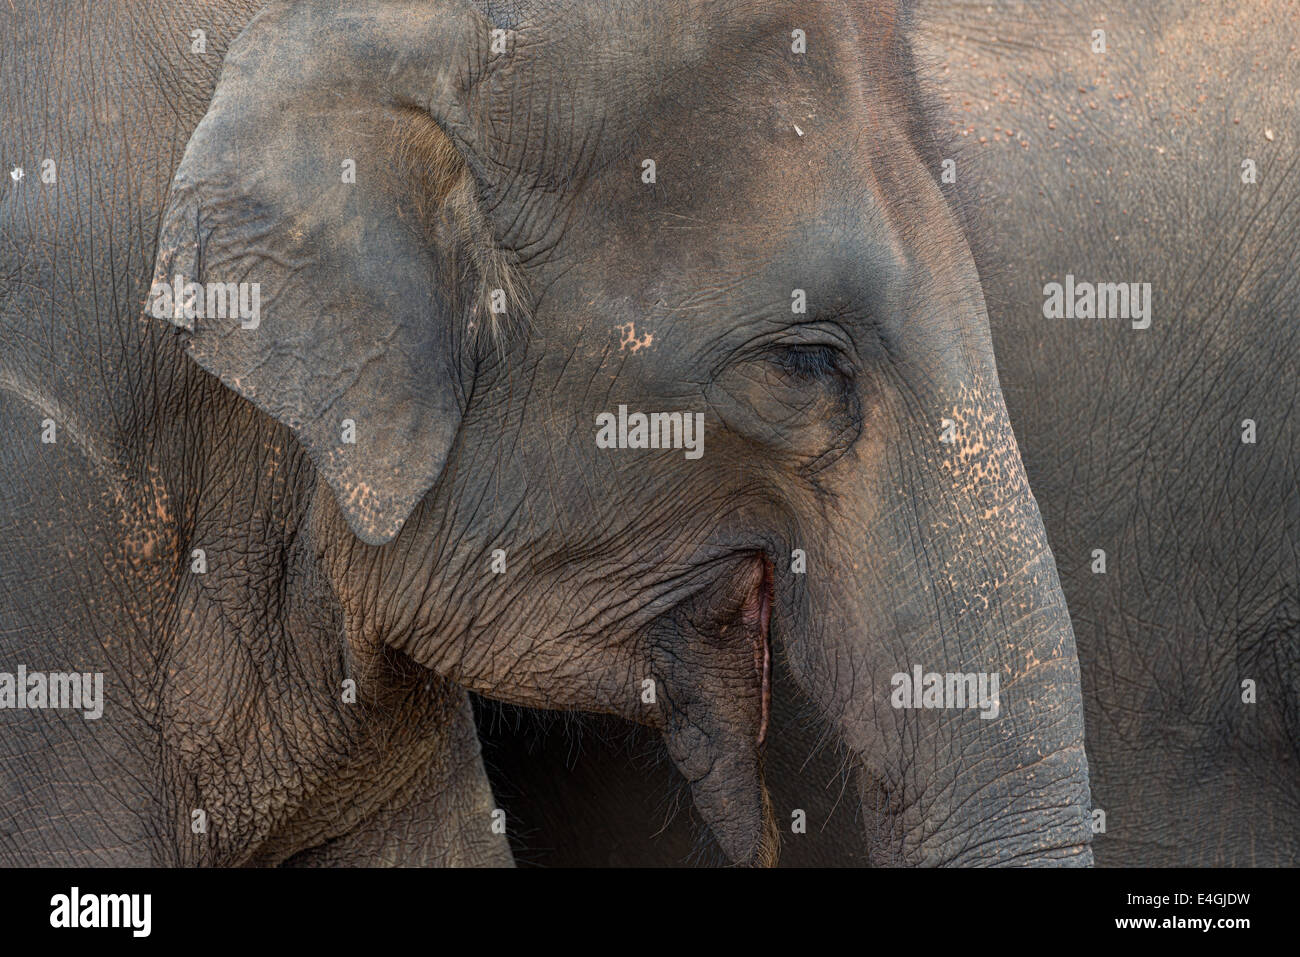 Profile of the head of a Sri Lankan elephant Stock Photo